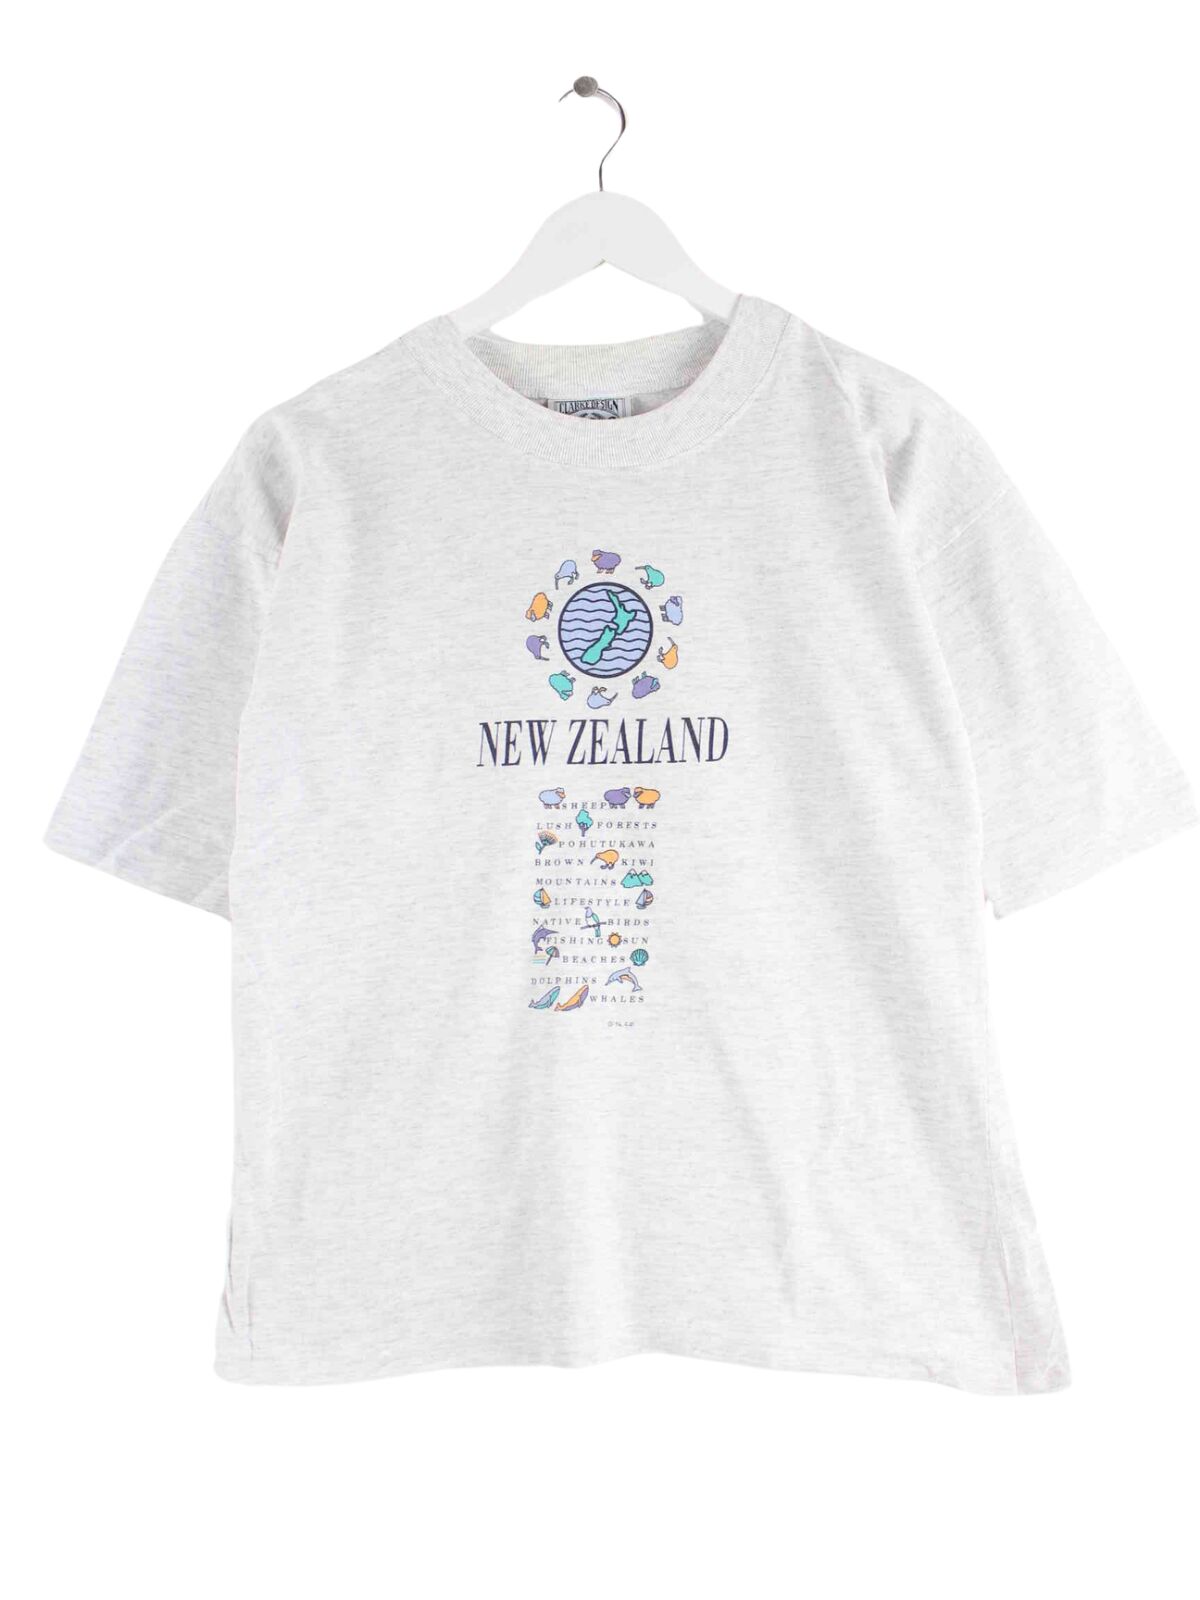 Vintage 1994 New Zealand Print Single Stitched T-Shirt Grau S (front image)